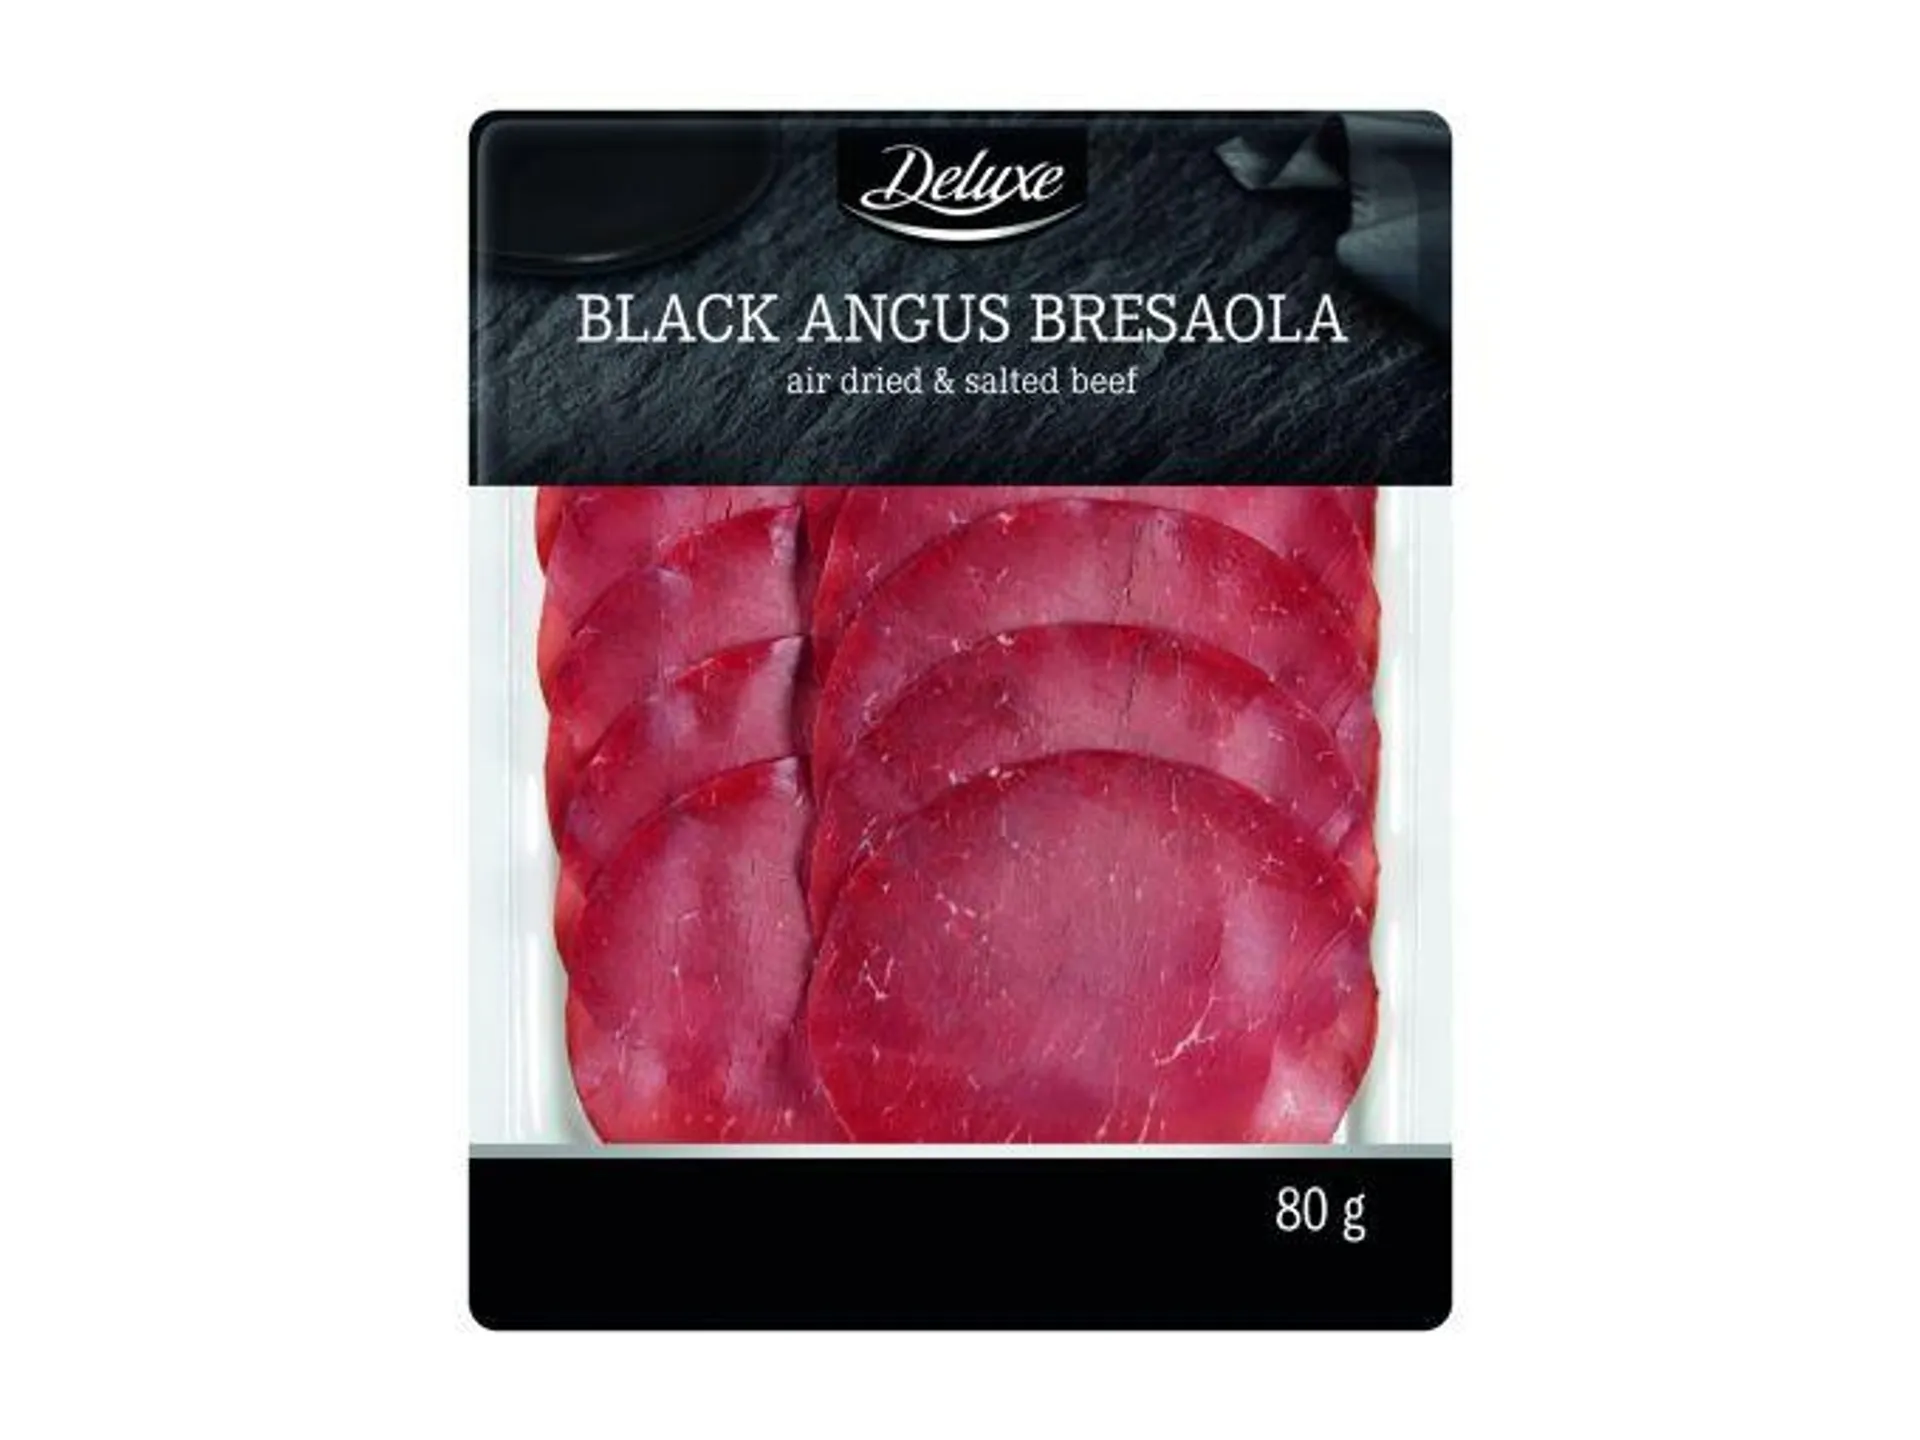 Black Angus Bresaola